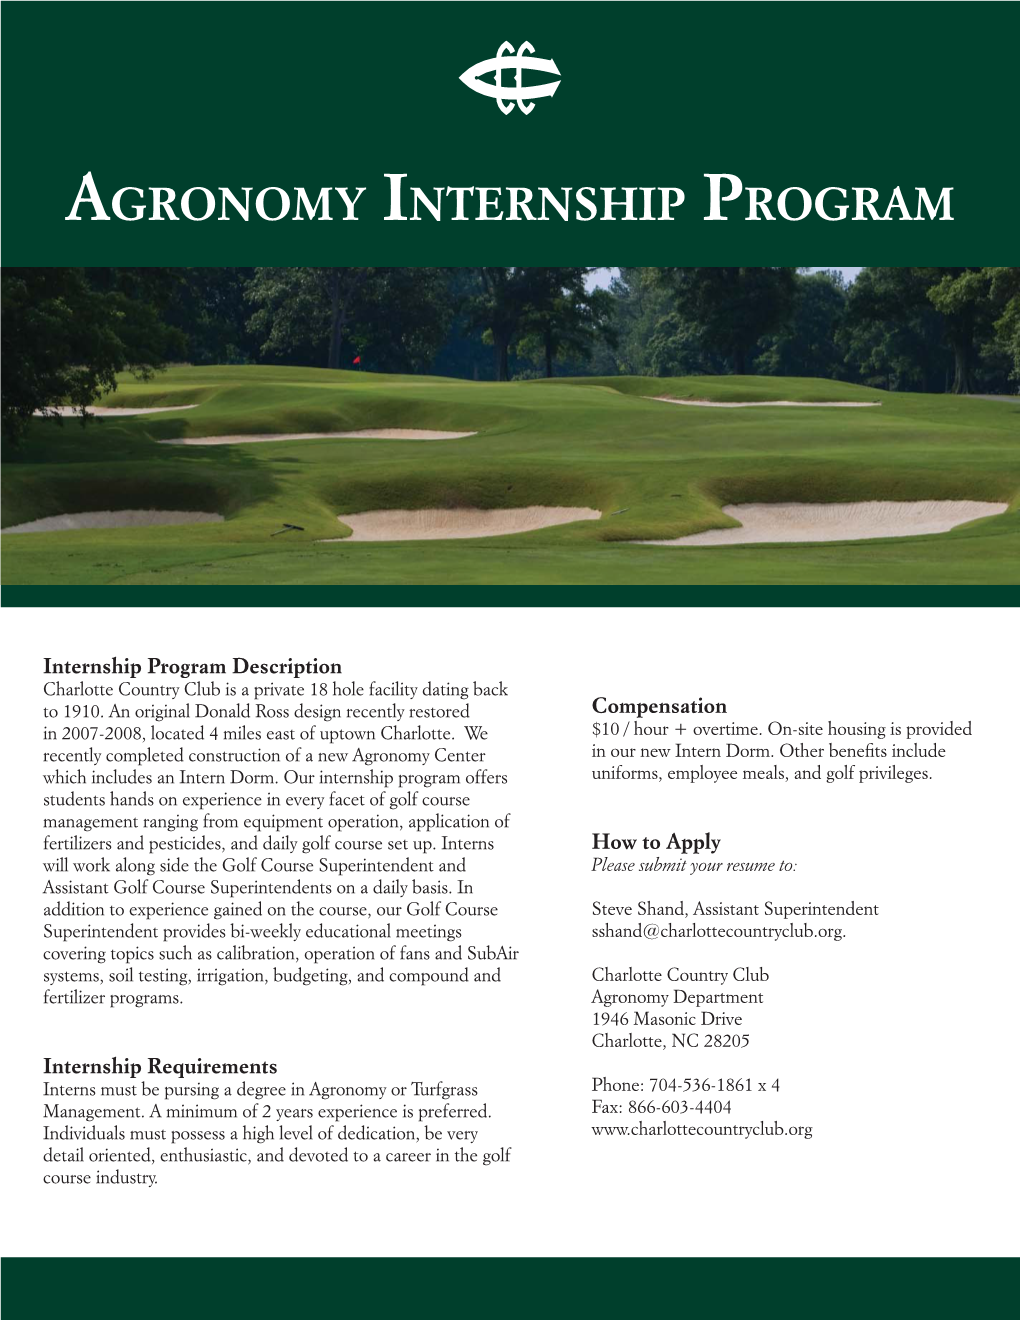 Charlotte Country Club Agronomy Internship Program.Indd